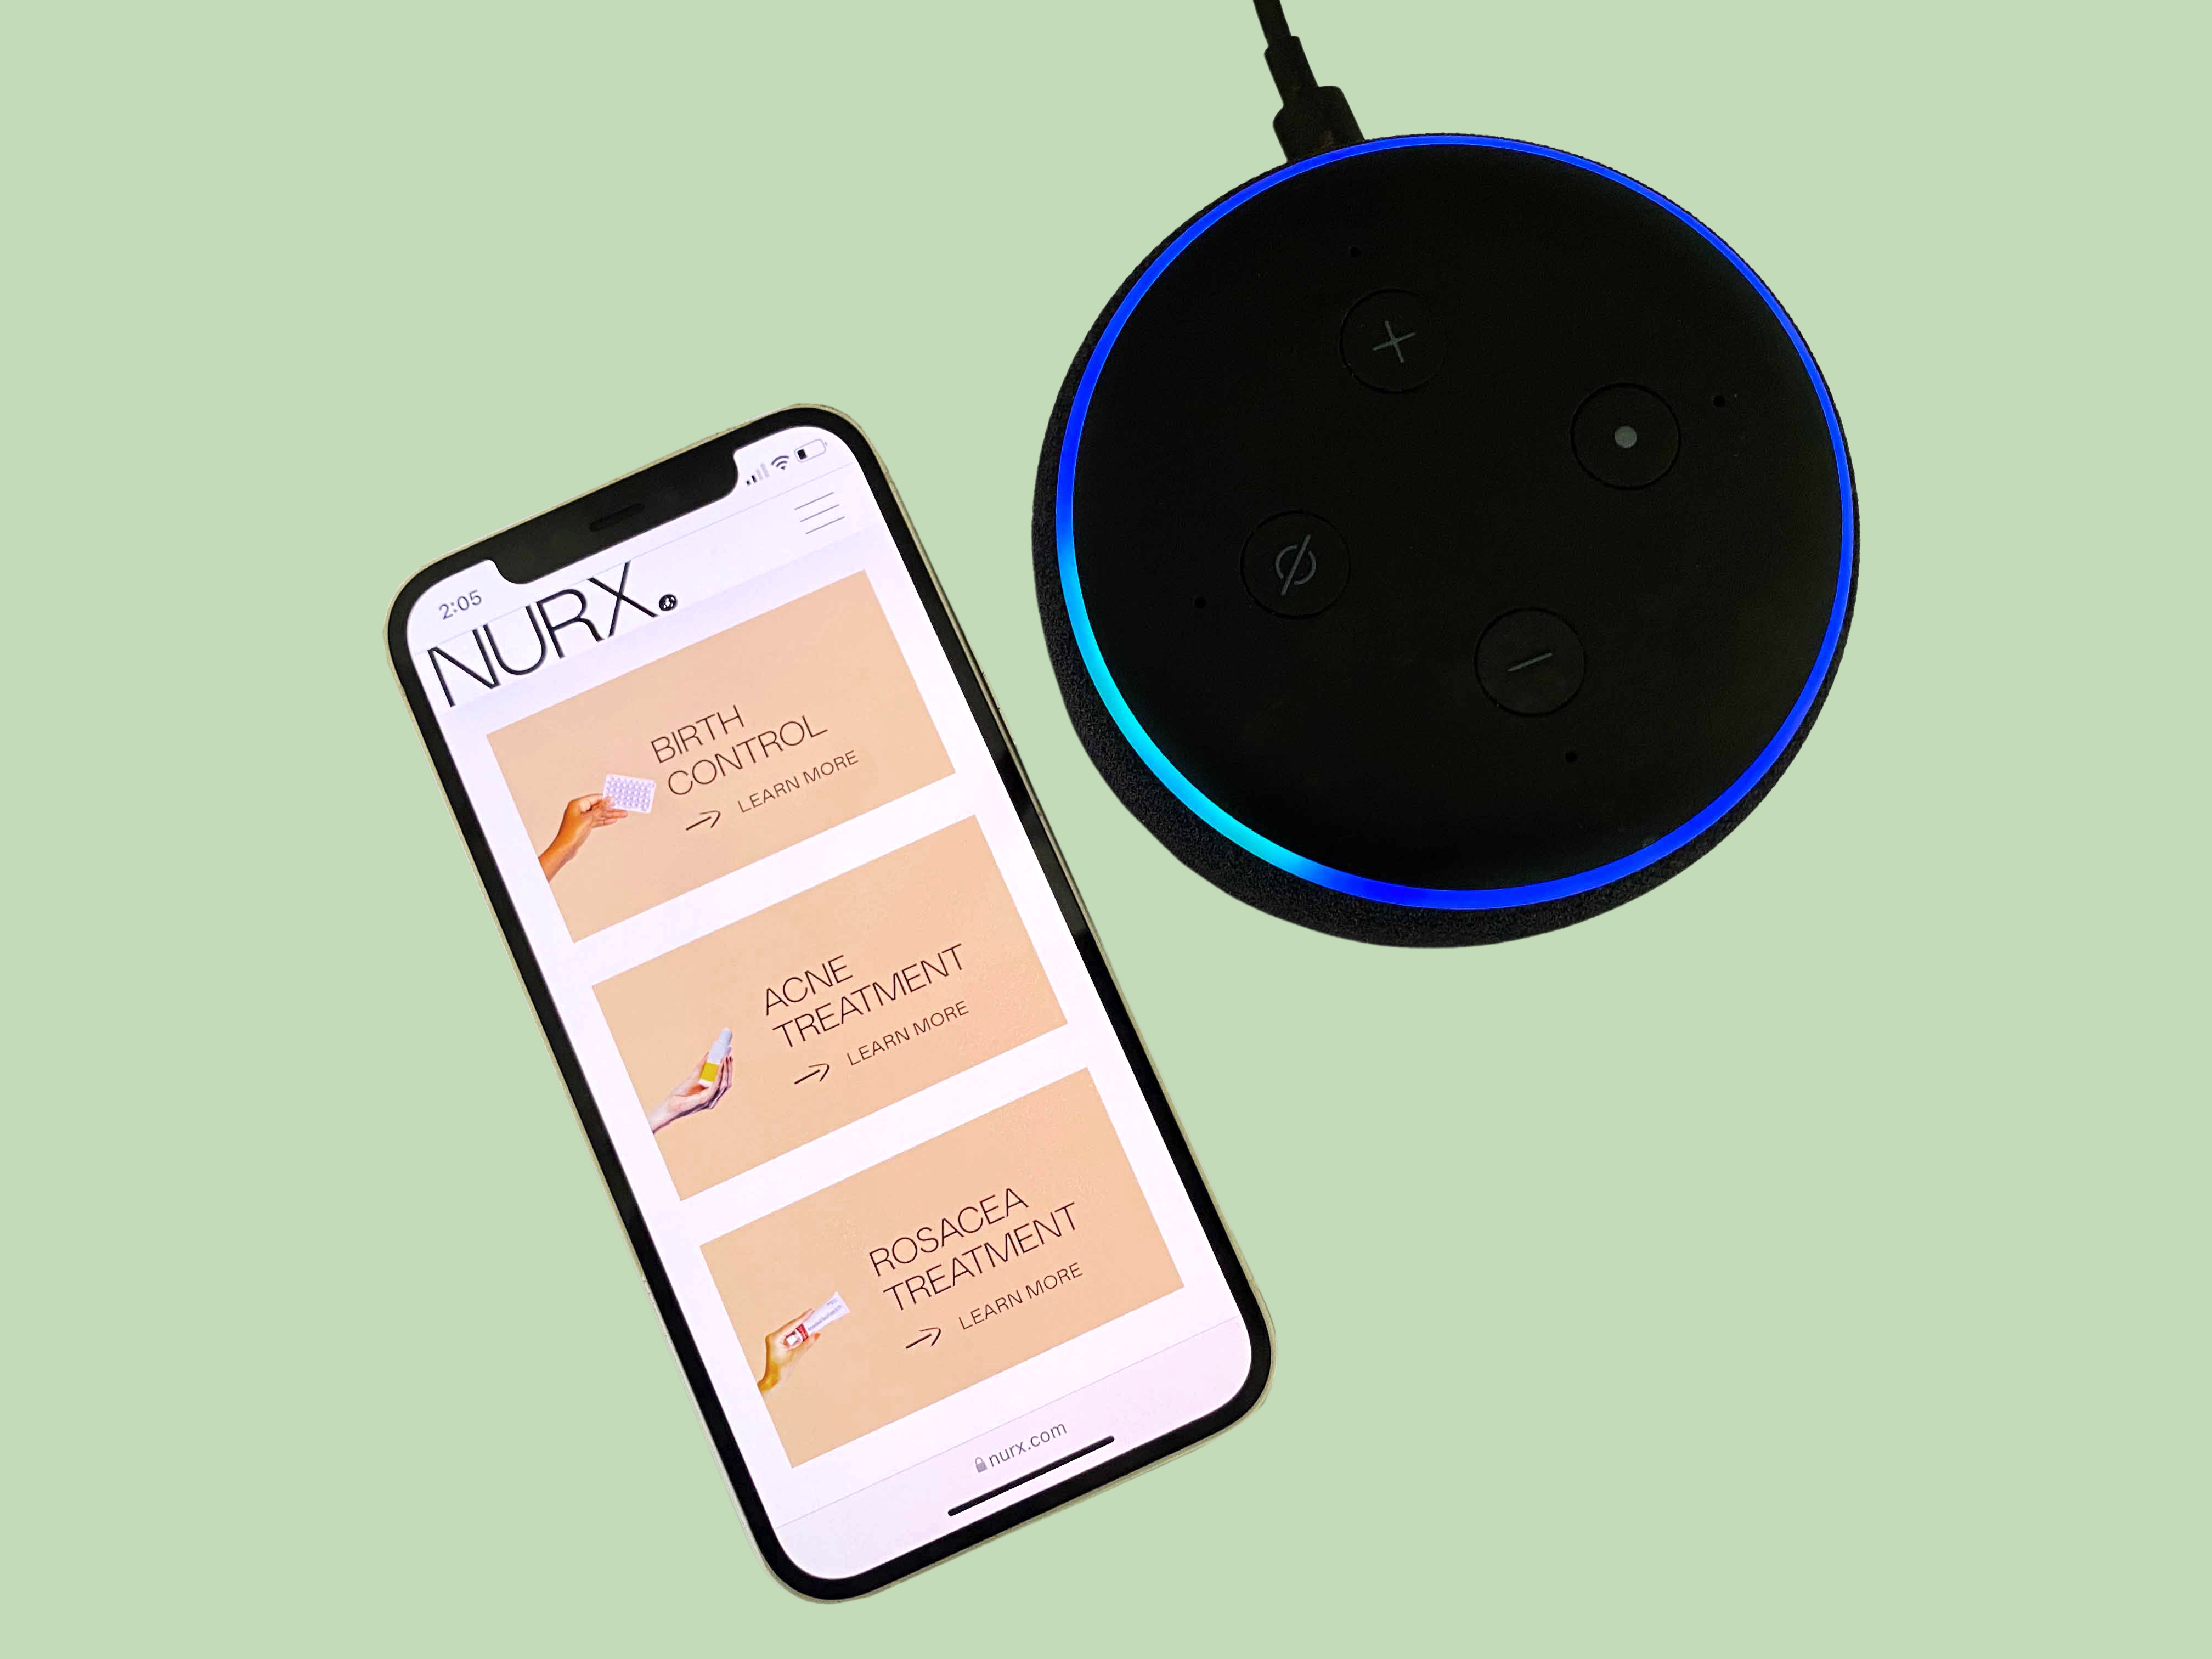 smartphone with screenshot of Nurx app and Amazon Alexa device